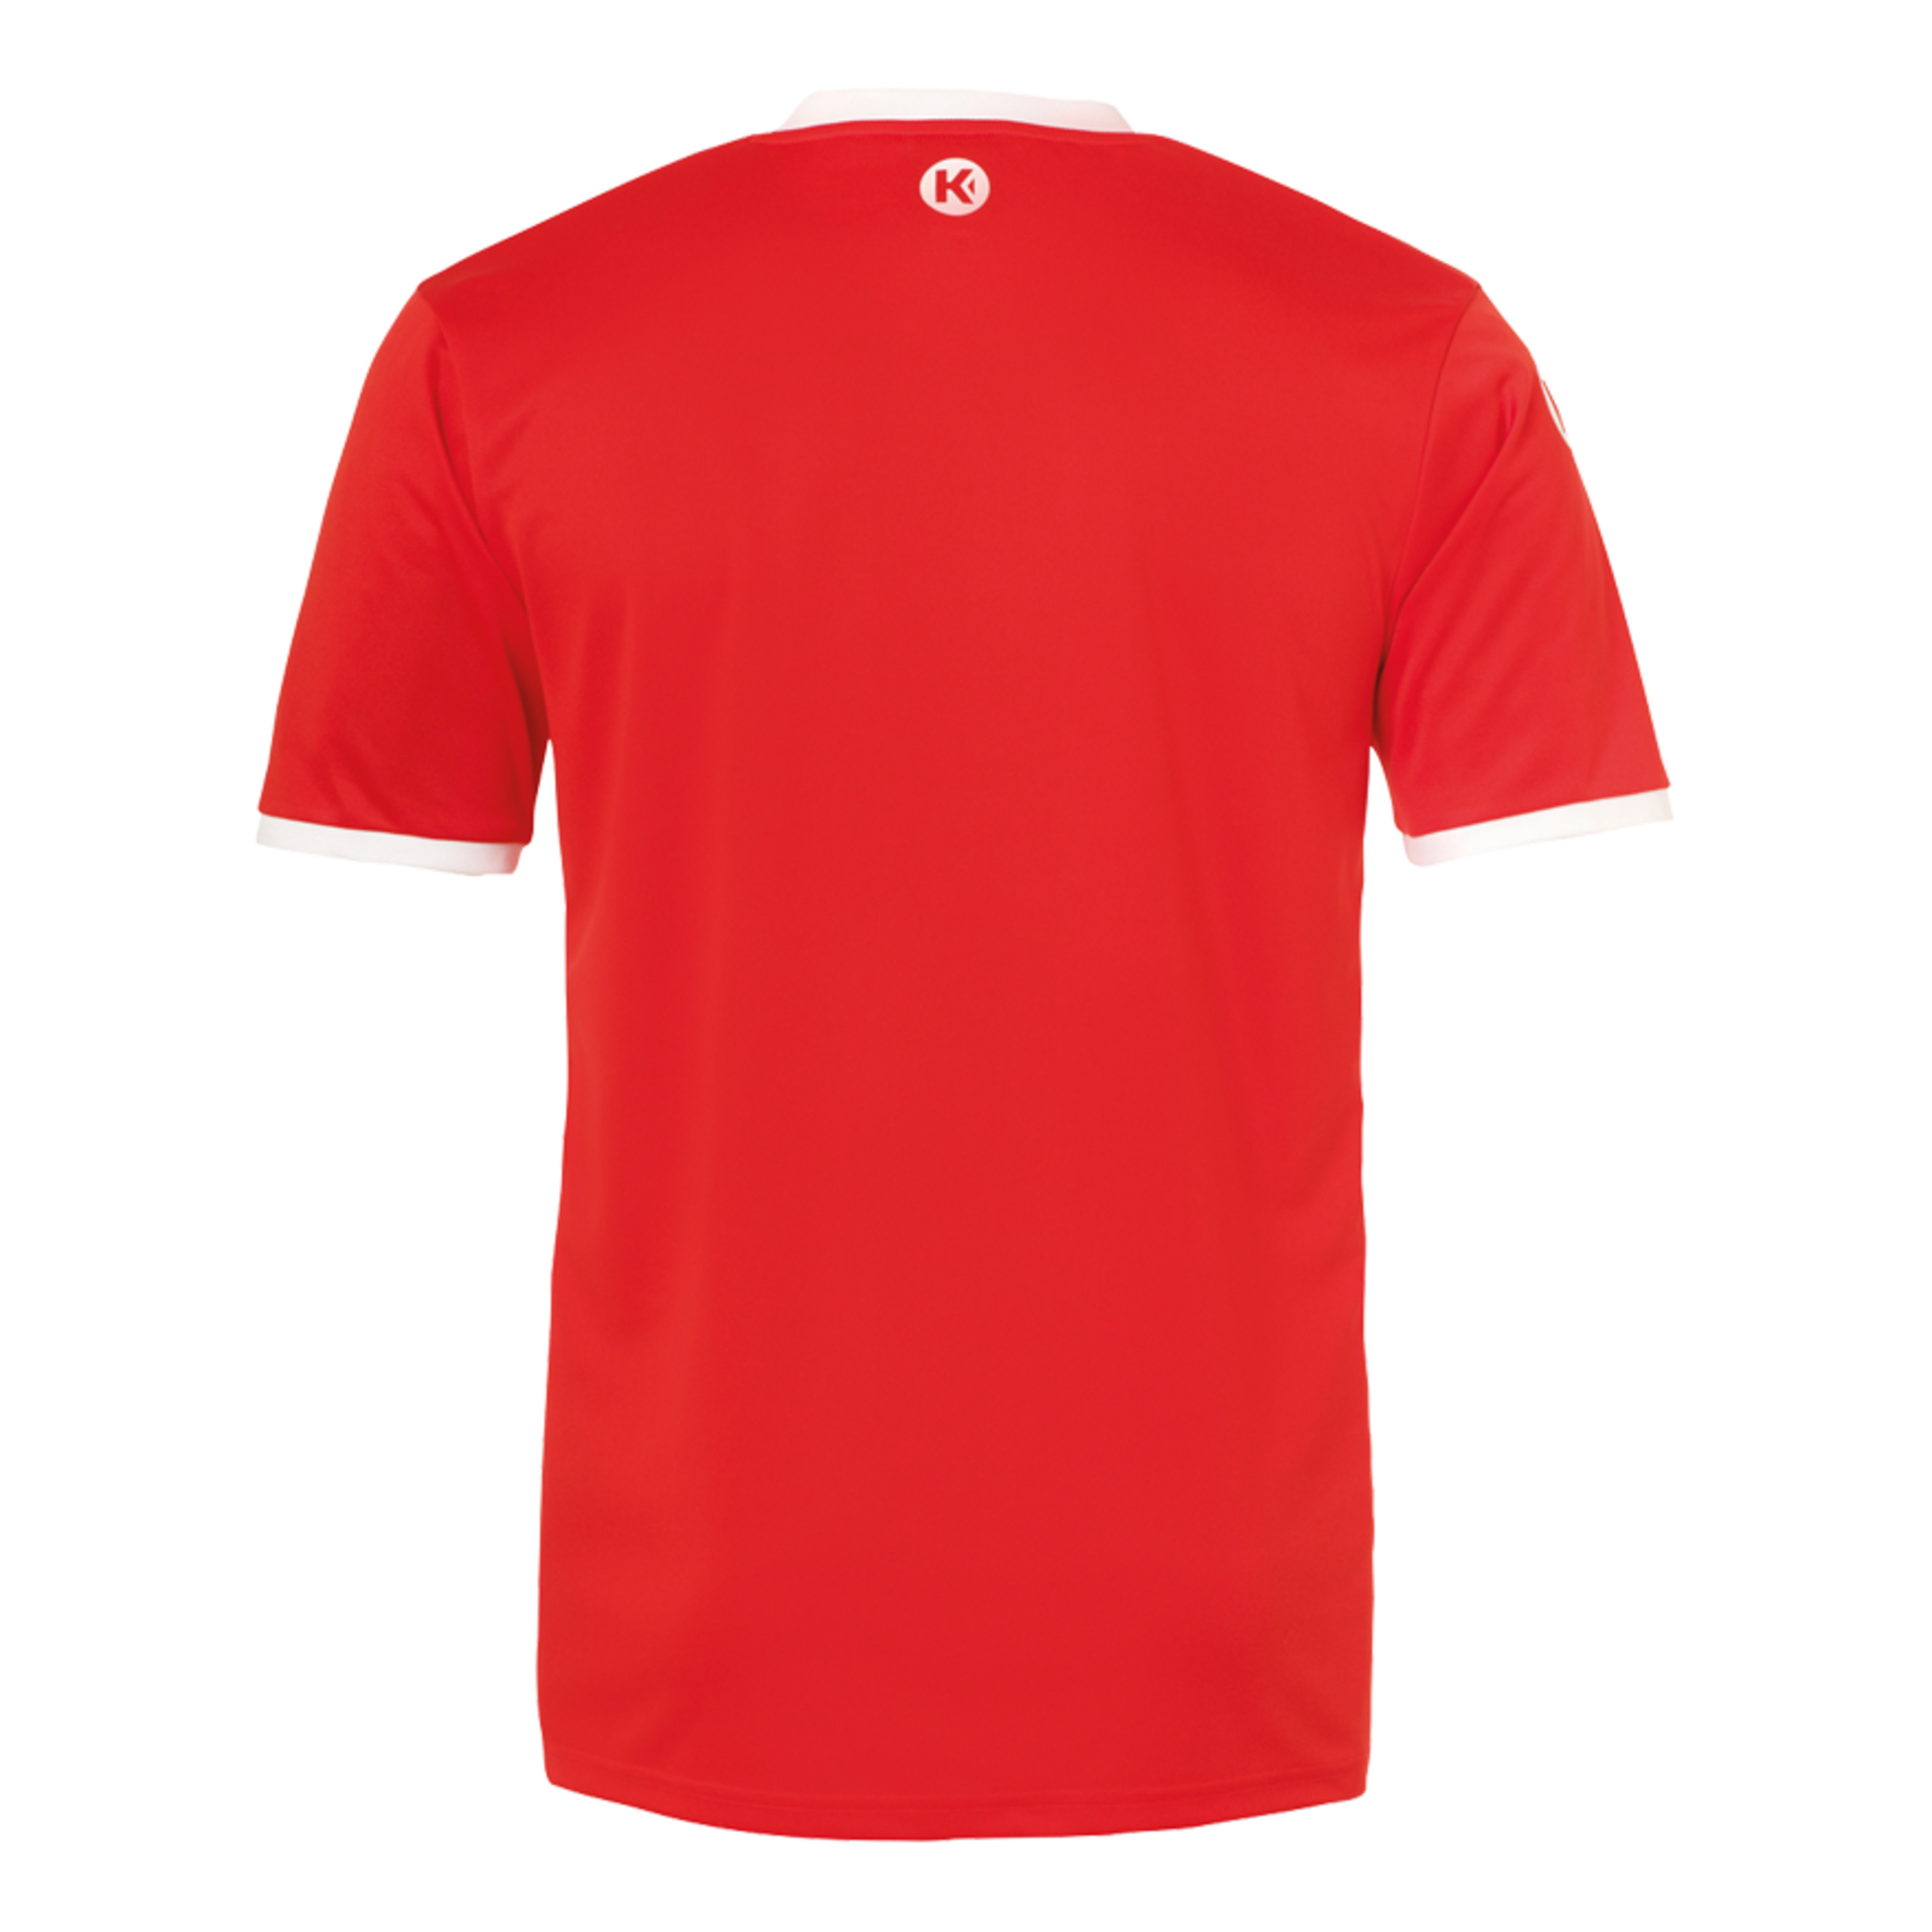 Curve Camiseta Rojo/blanco Kempa